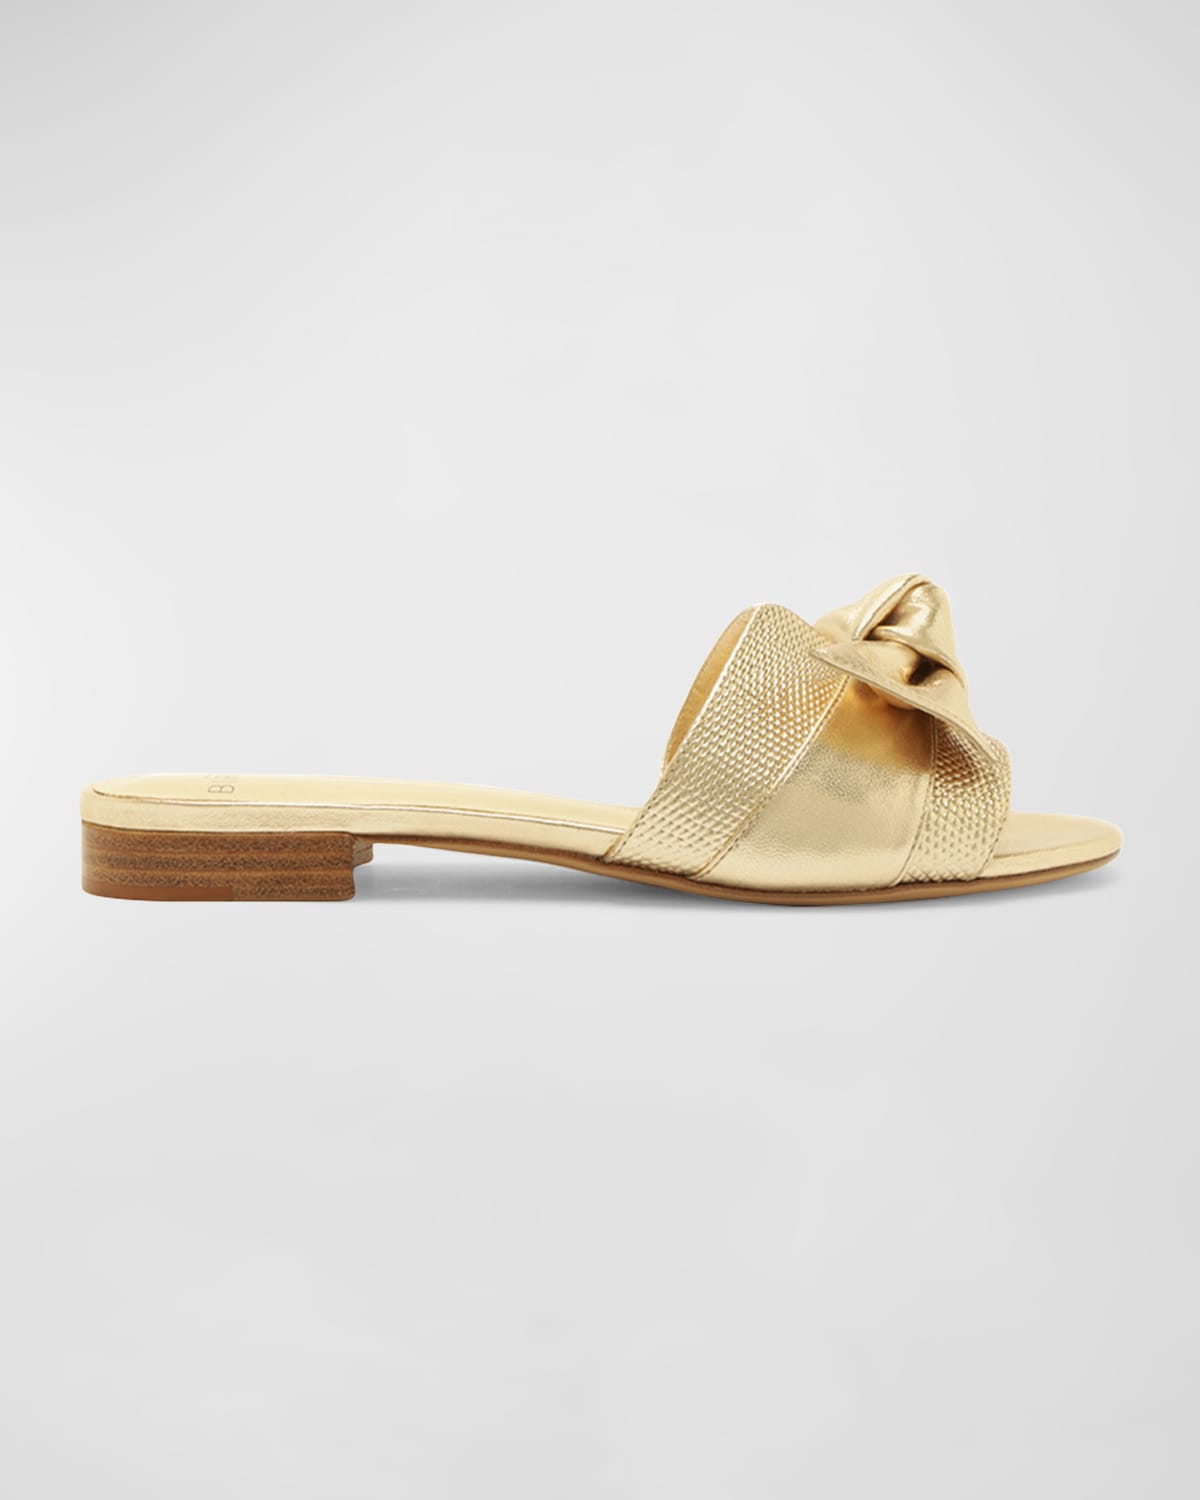 Maxi Clarita Leather Knot Flat Sandals